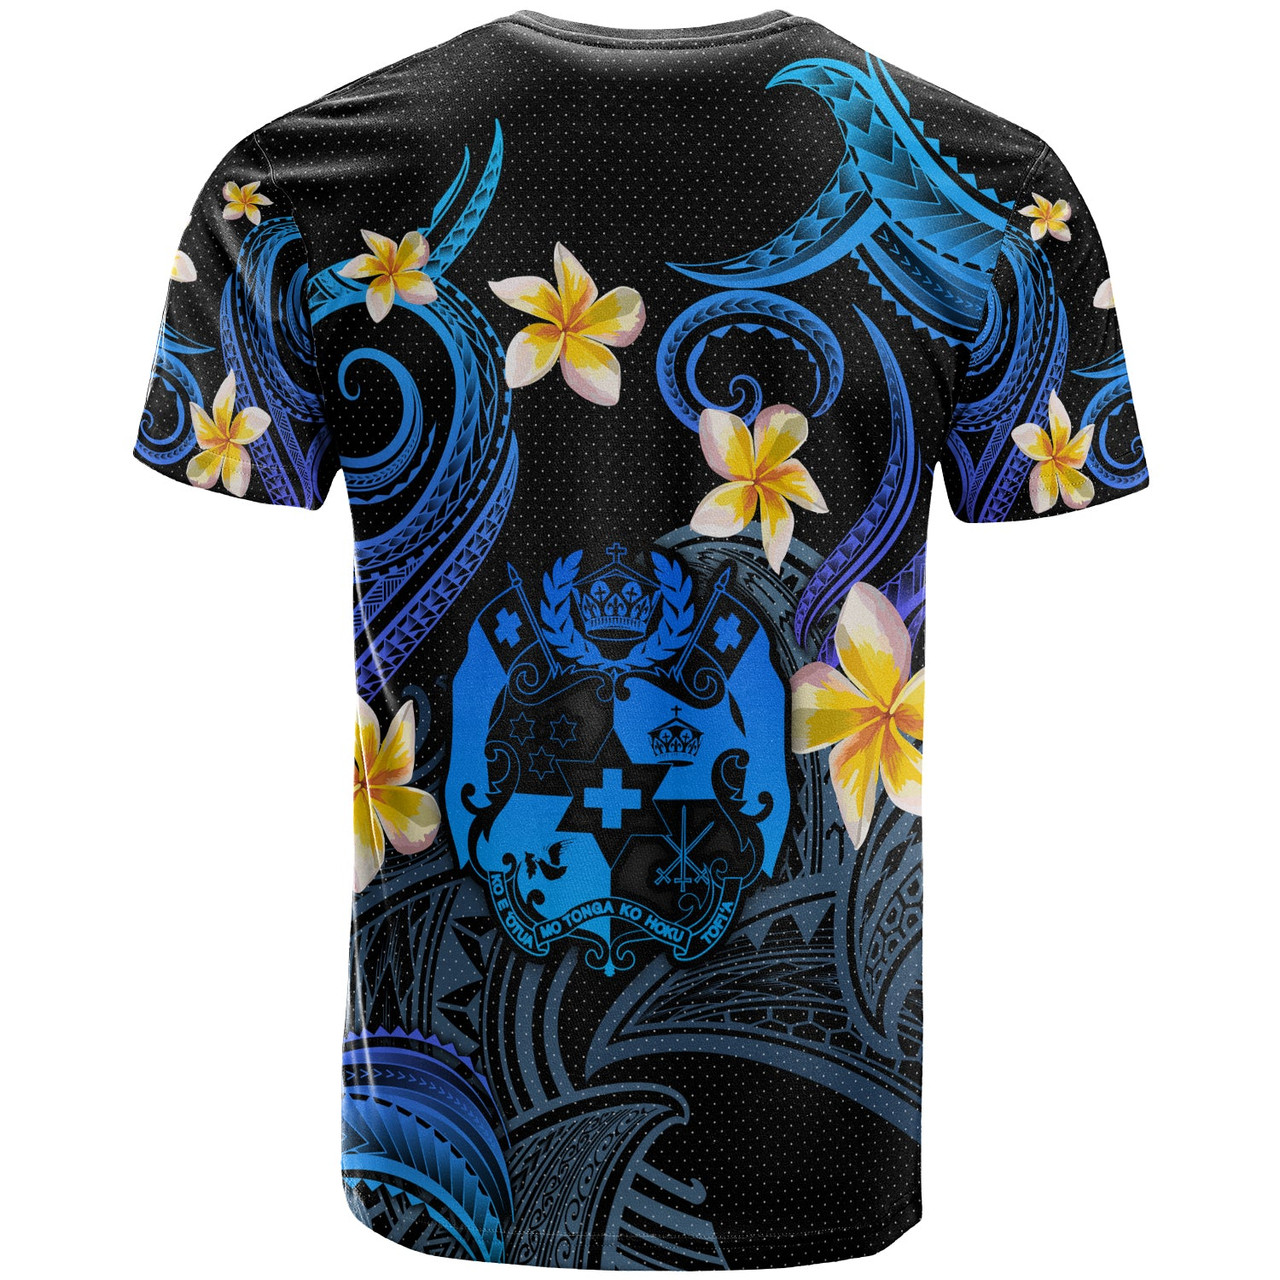 Tonga T-shirt - Custom Personalised Polynesian Waves with Plumeria Flowers (Blue)